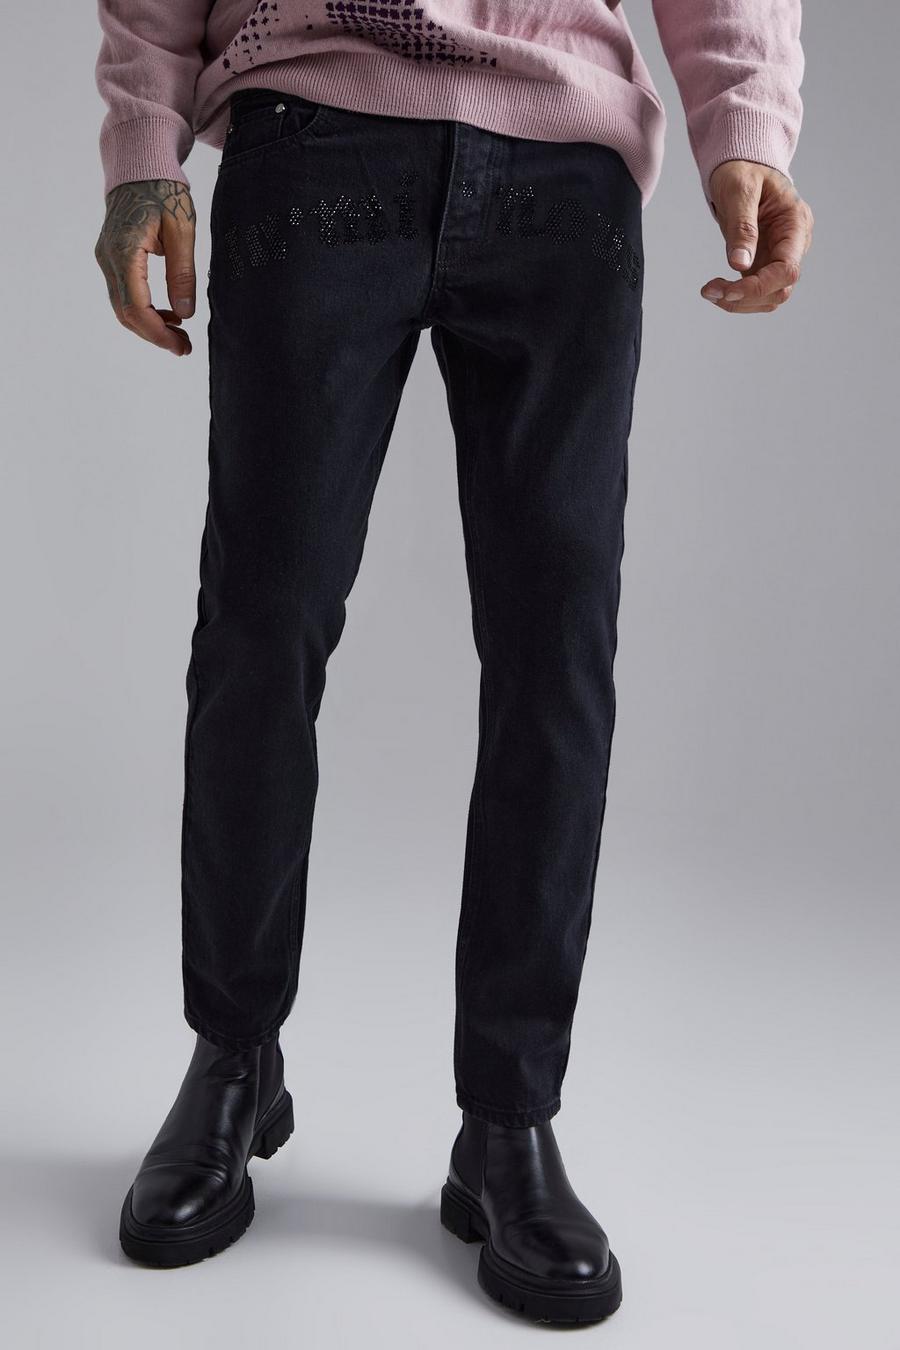 Black Slim Rhinestone Graphic Jeans